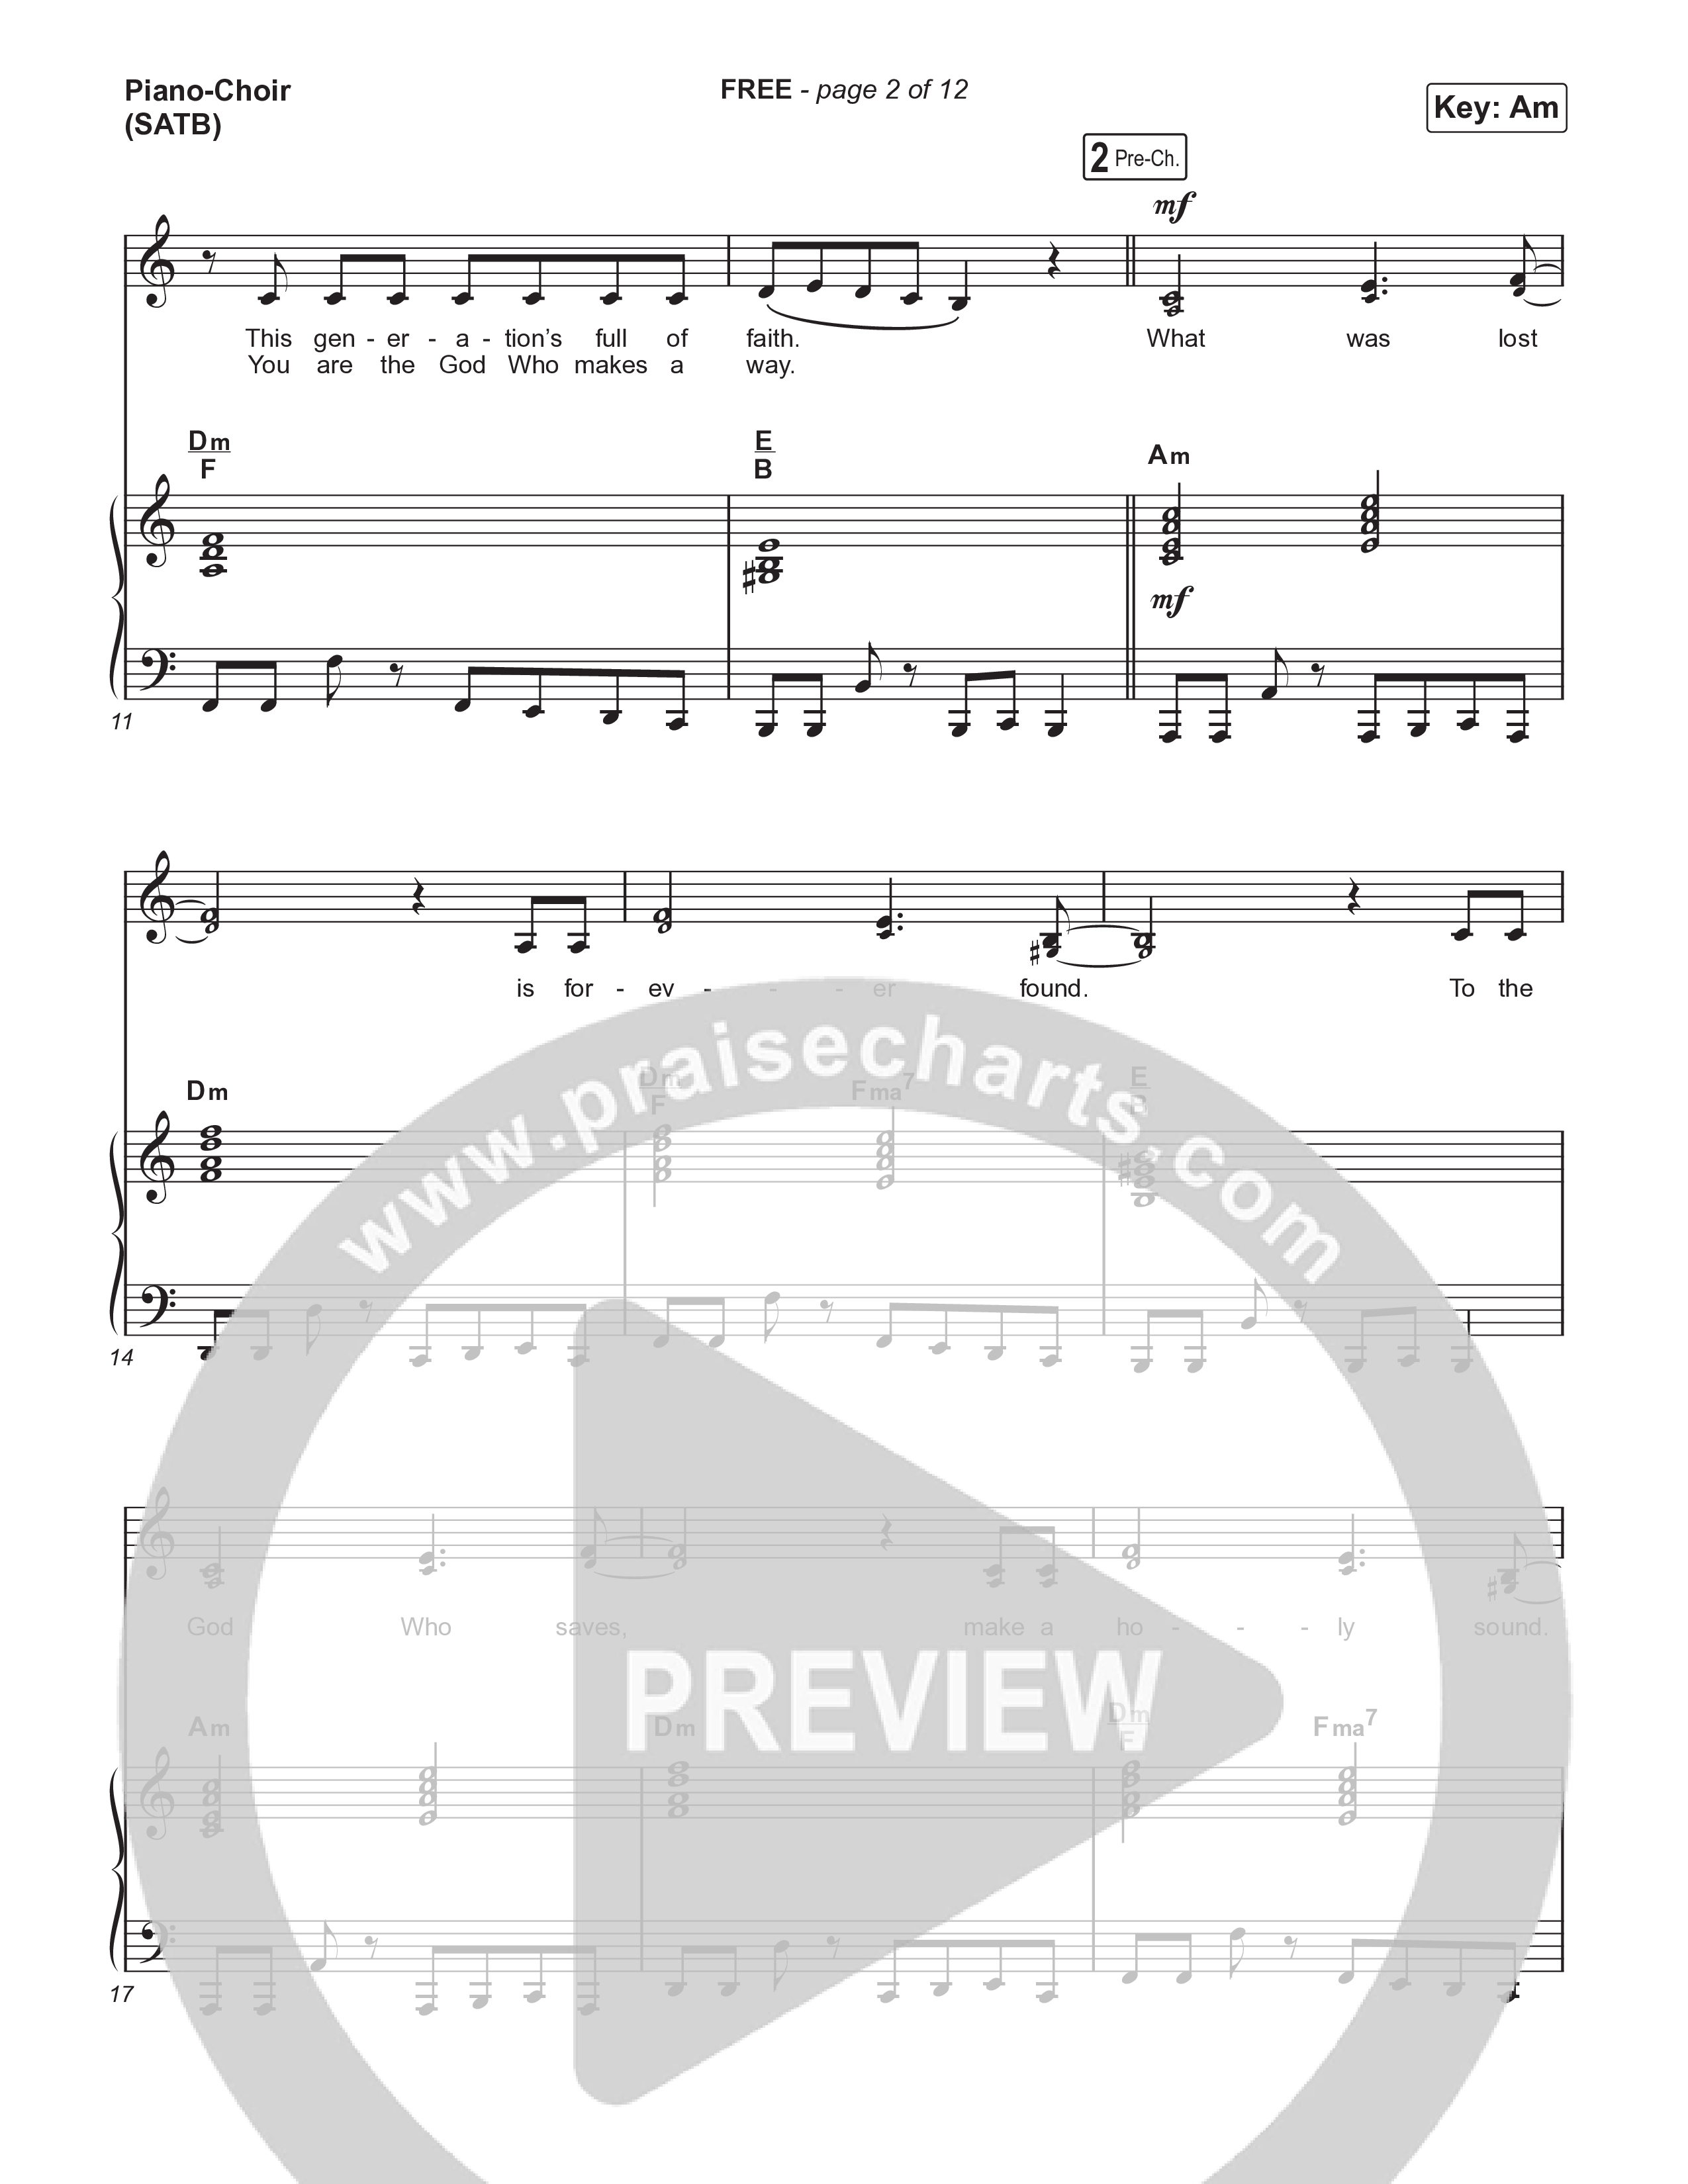 FREE Piano/Vocal (SATB) (SEU Worship)